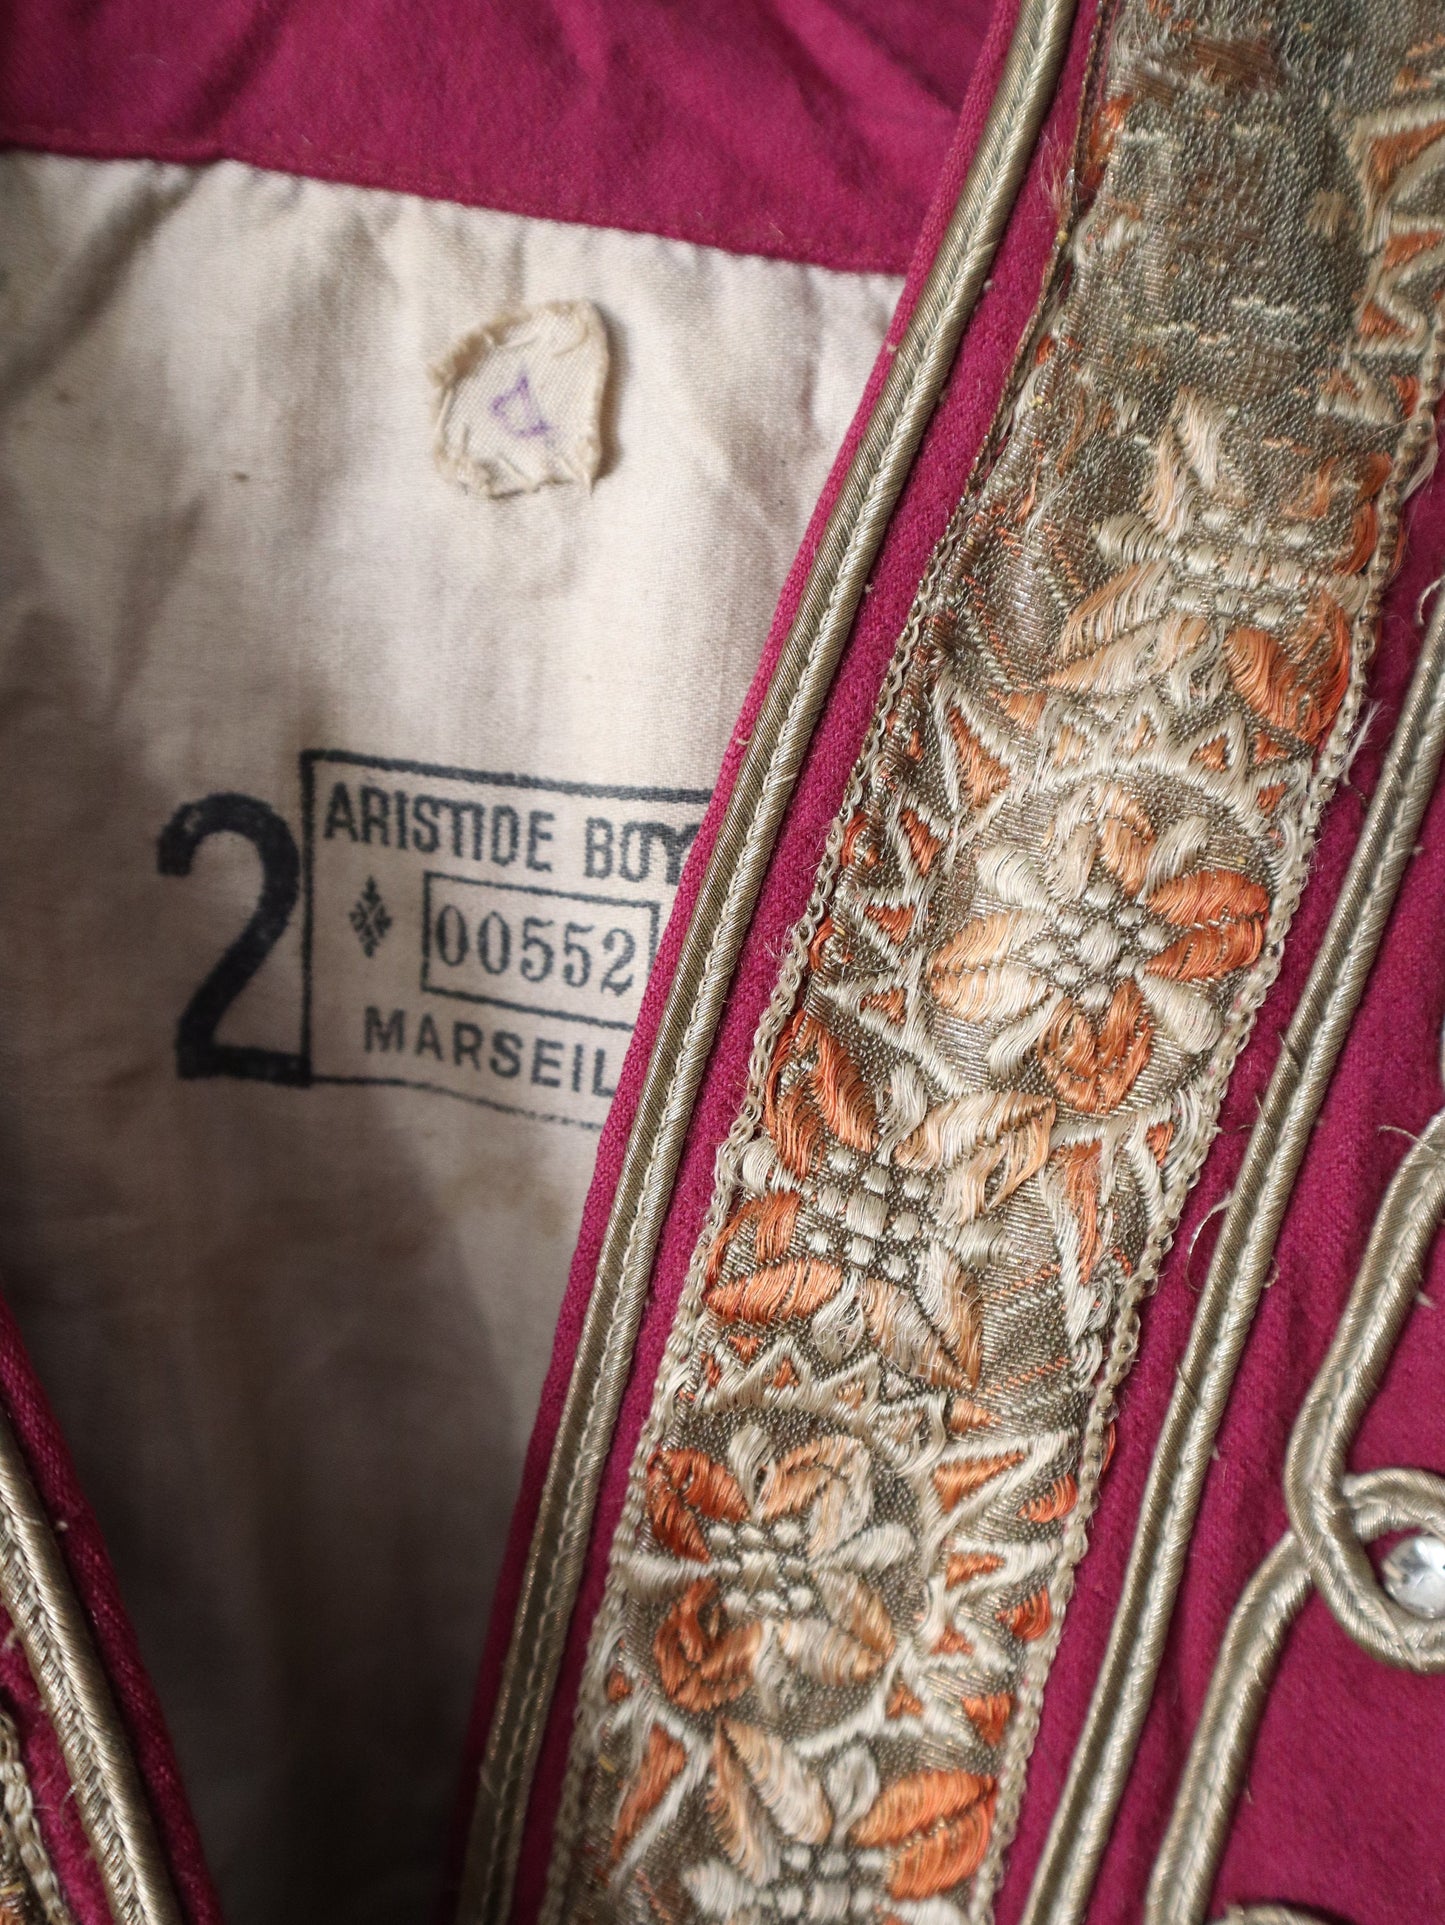 1920s French Theatre Costume Boléro Fushia Pink Purple Jacket Cropped Woven Ribbon Trim Rhinestone